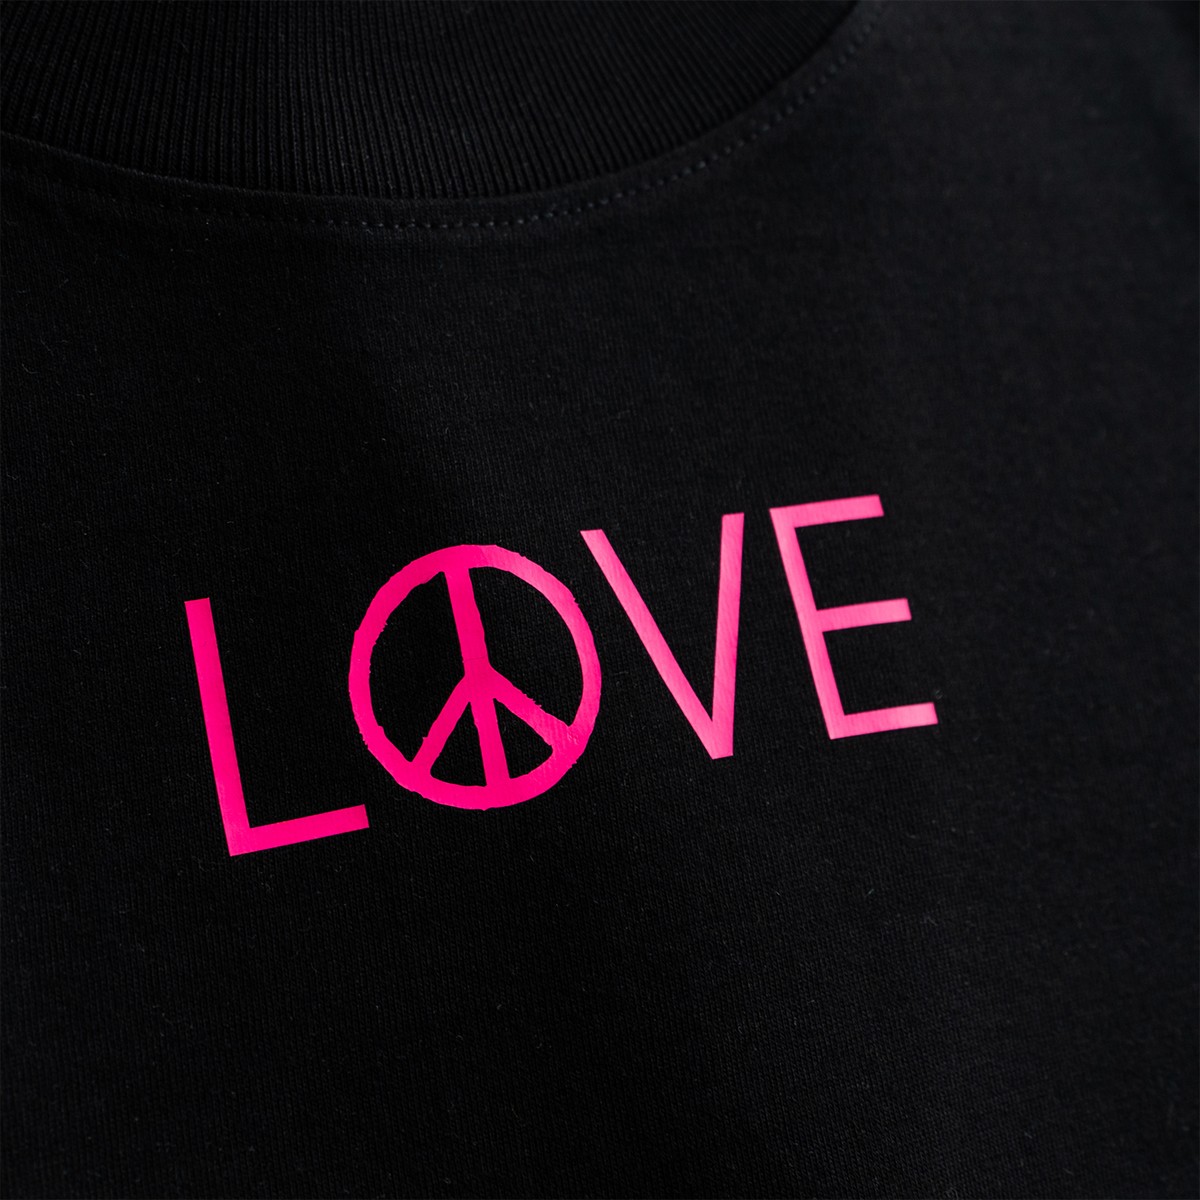 t-shirt LOVE AND PEACE black - PULS good stuff